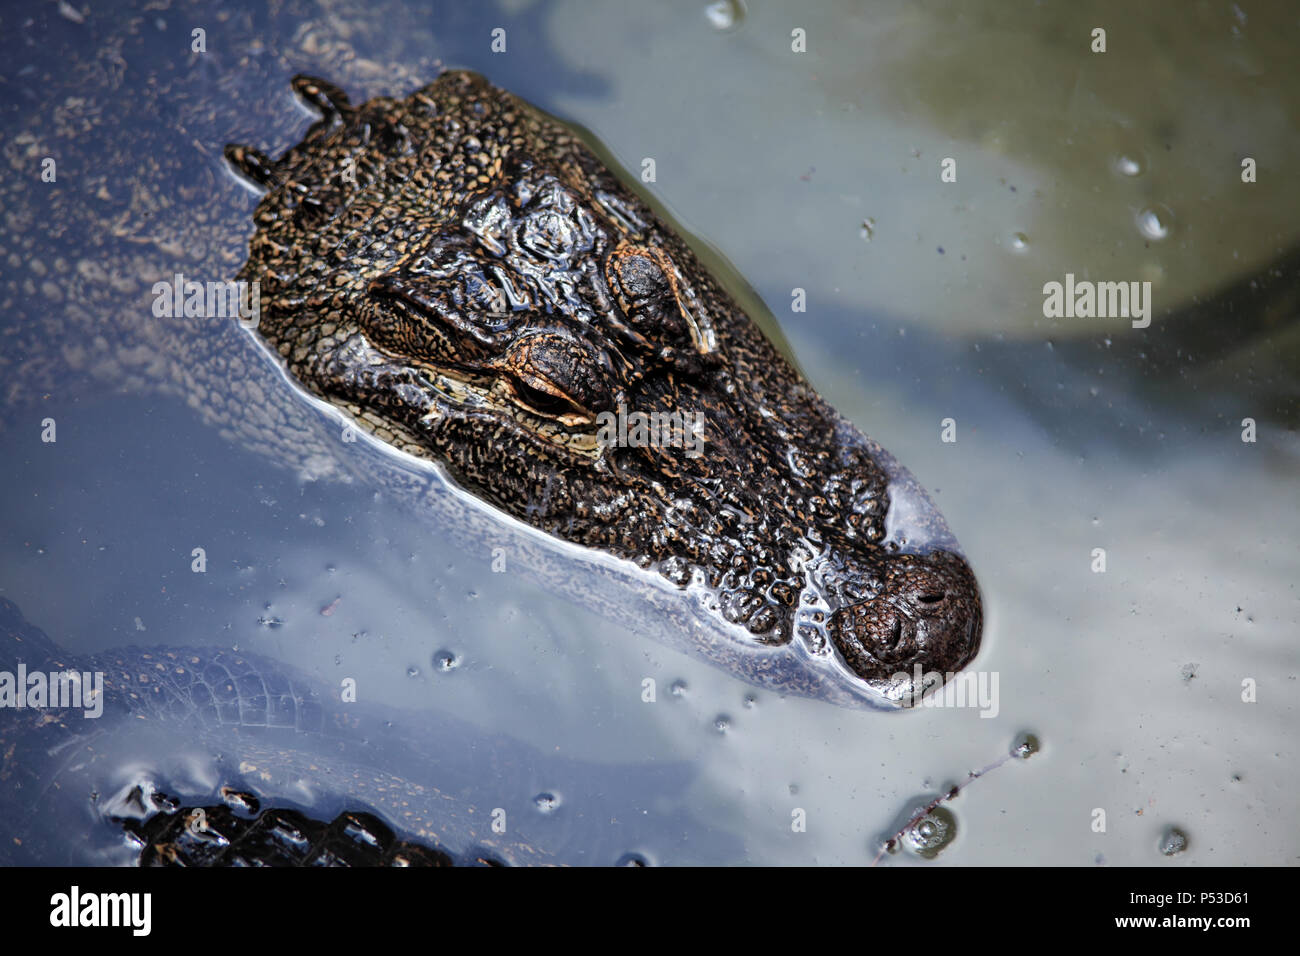 Primer plano de alligator flotando sobre el agua Foto de stock